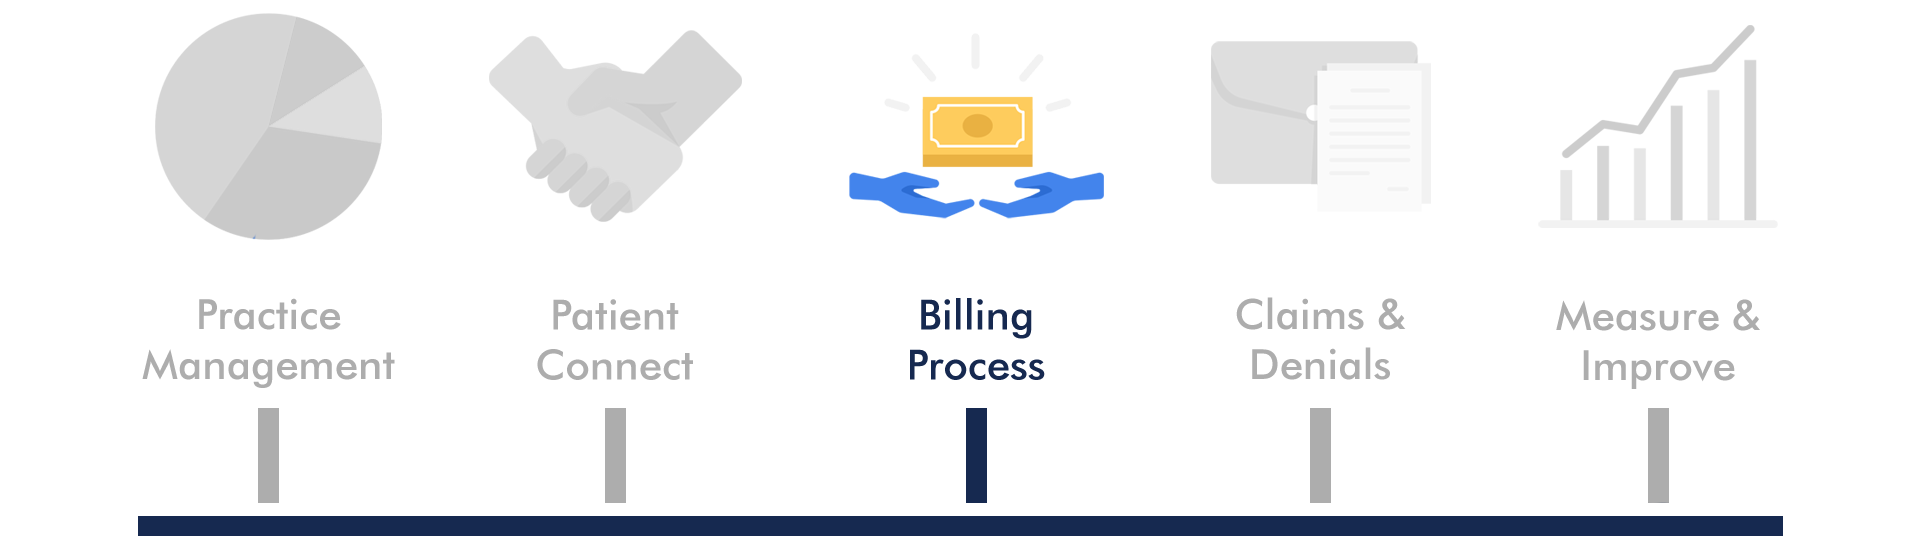 Billing Process.png